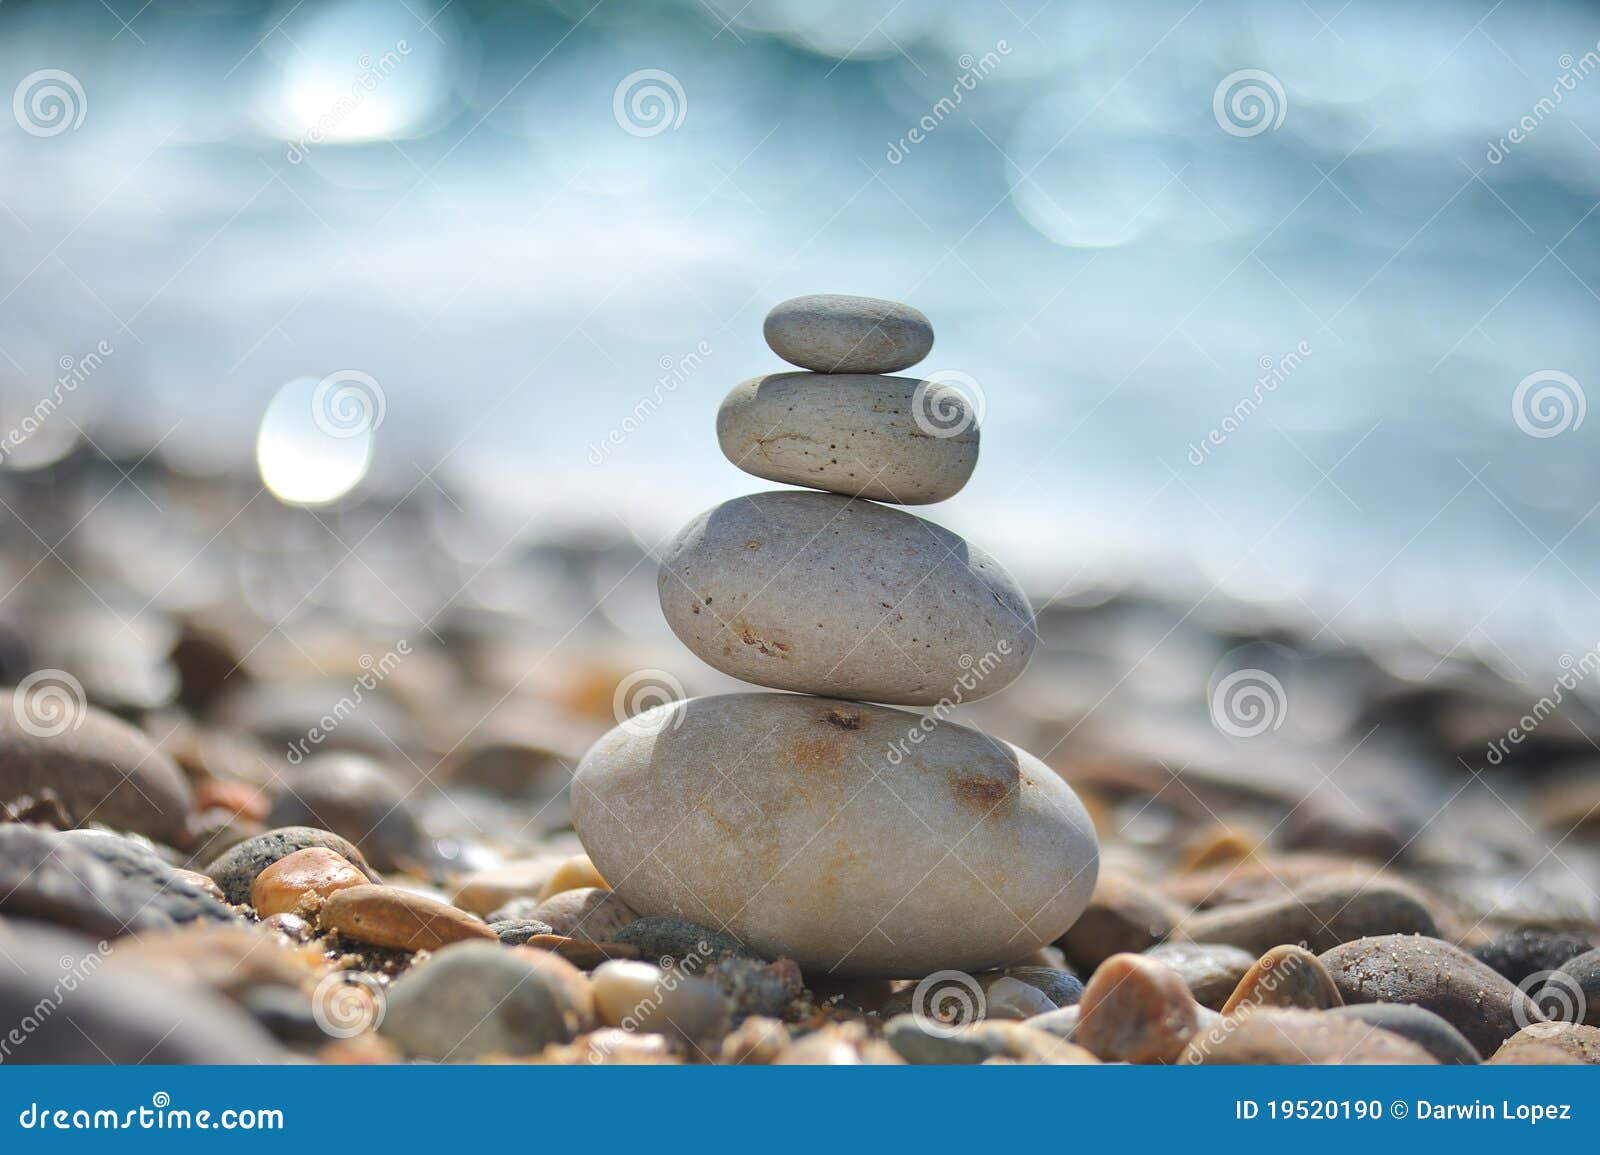 zen rocks on the beach